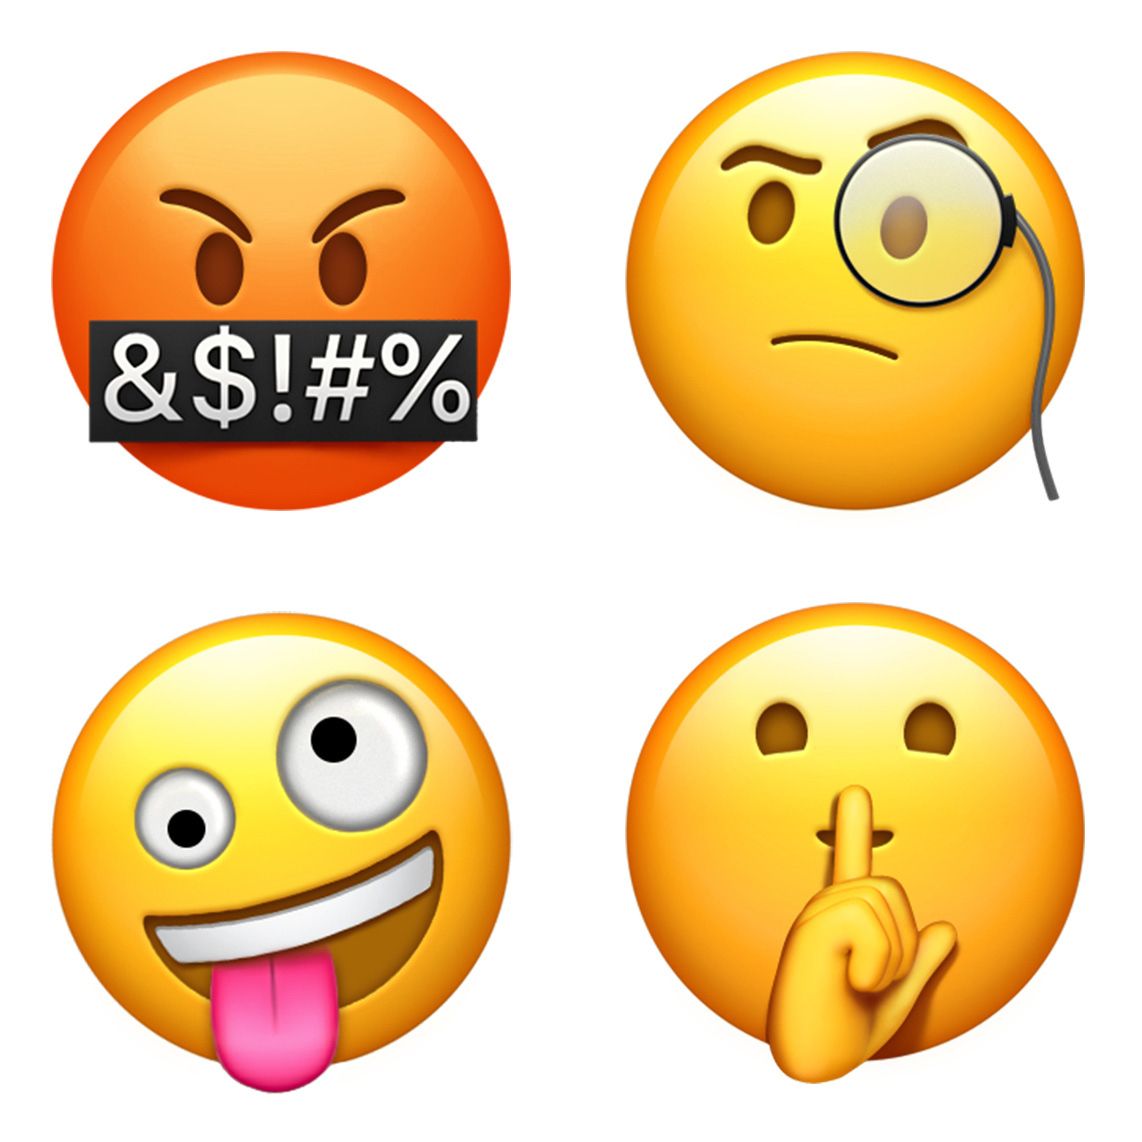 Apple Emojis #3